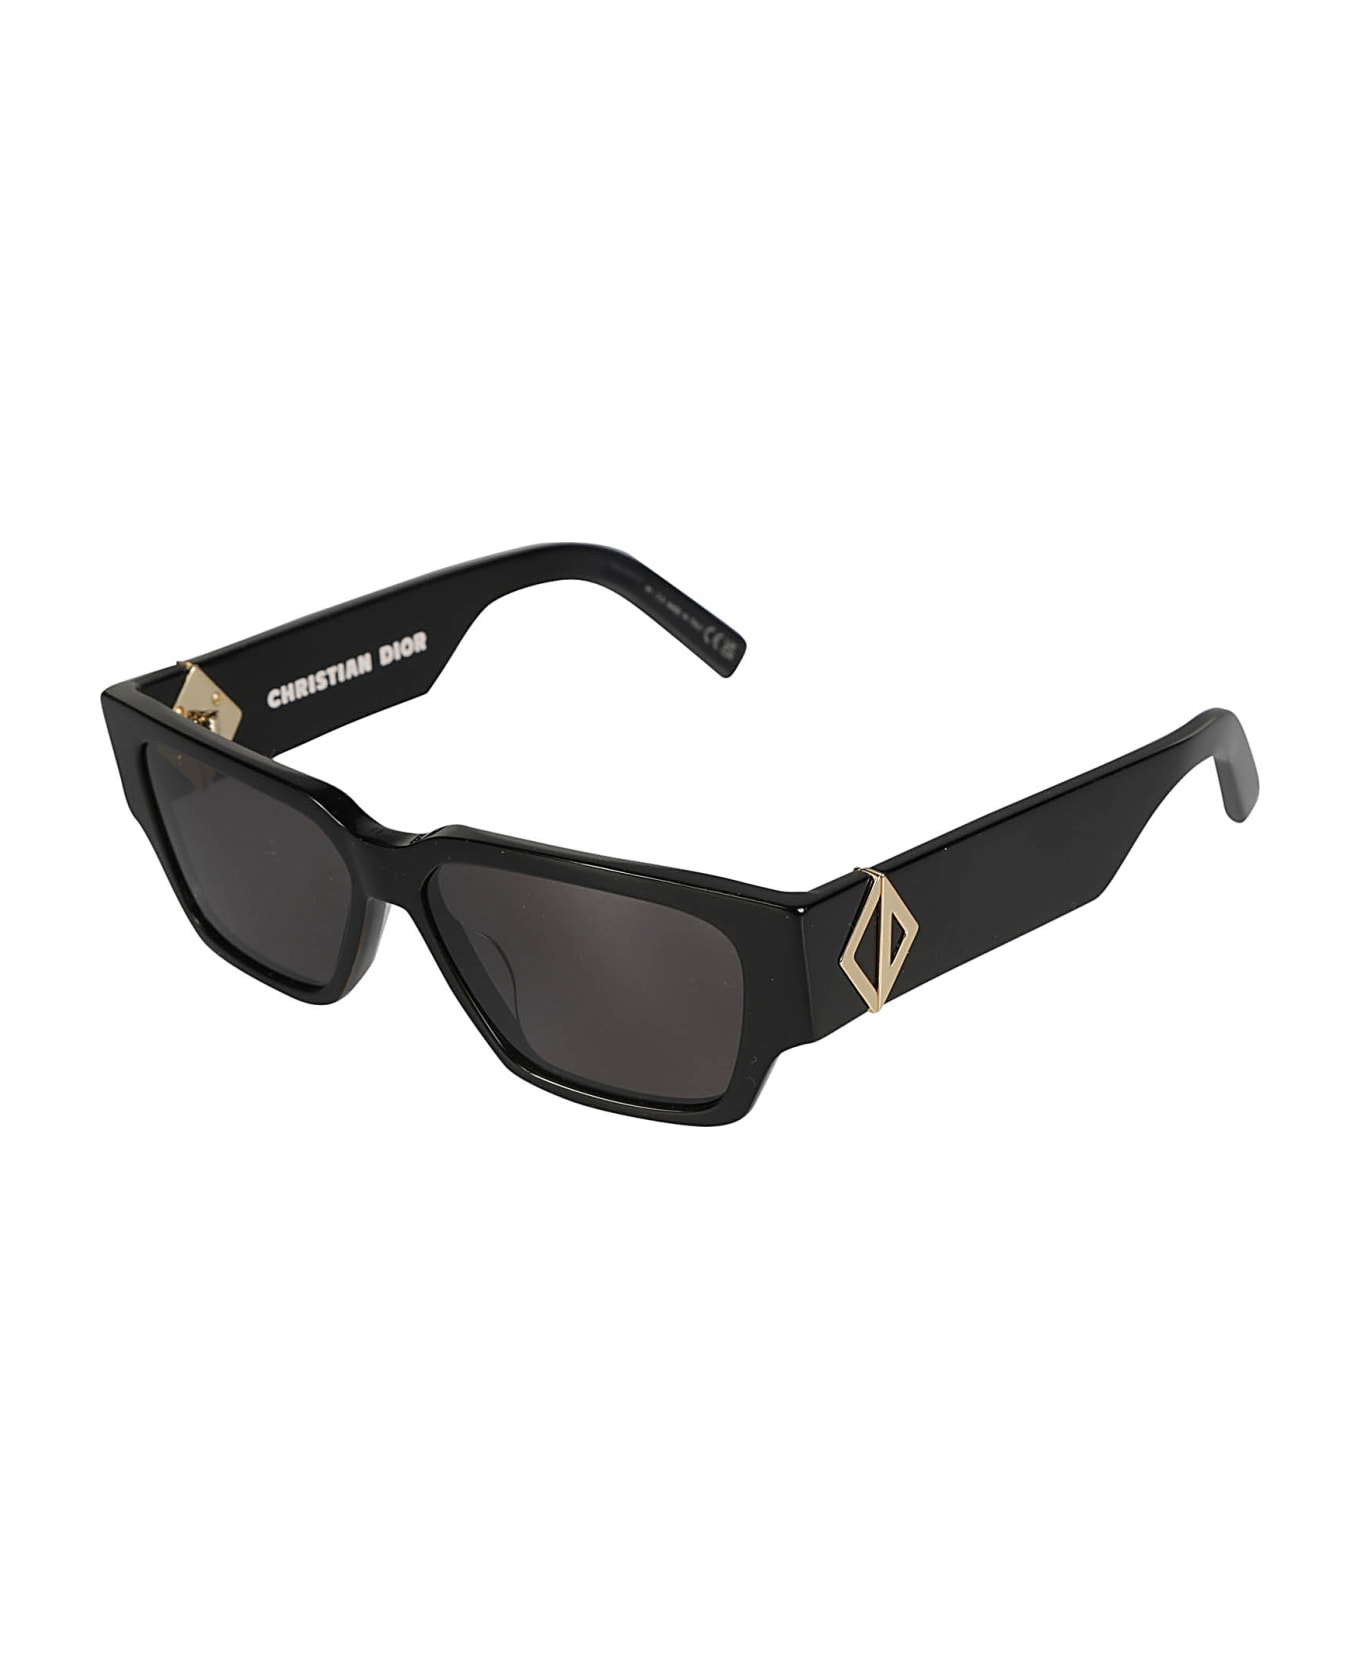 Dior Eyewear Diamond Sunglasses - 10a0